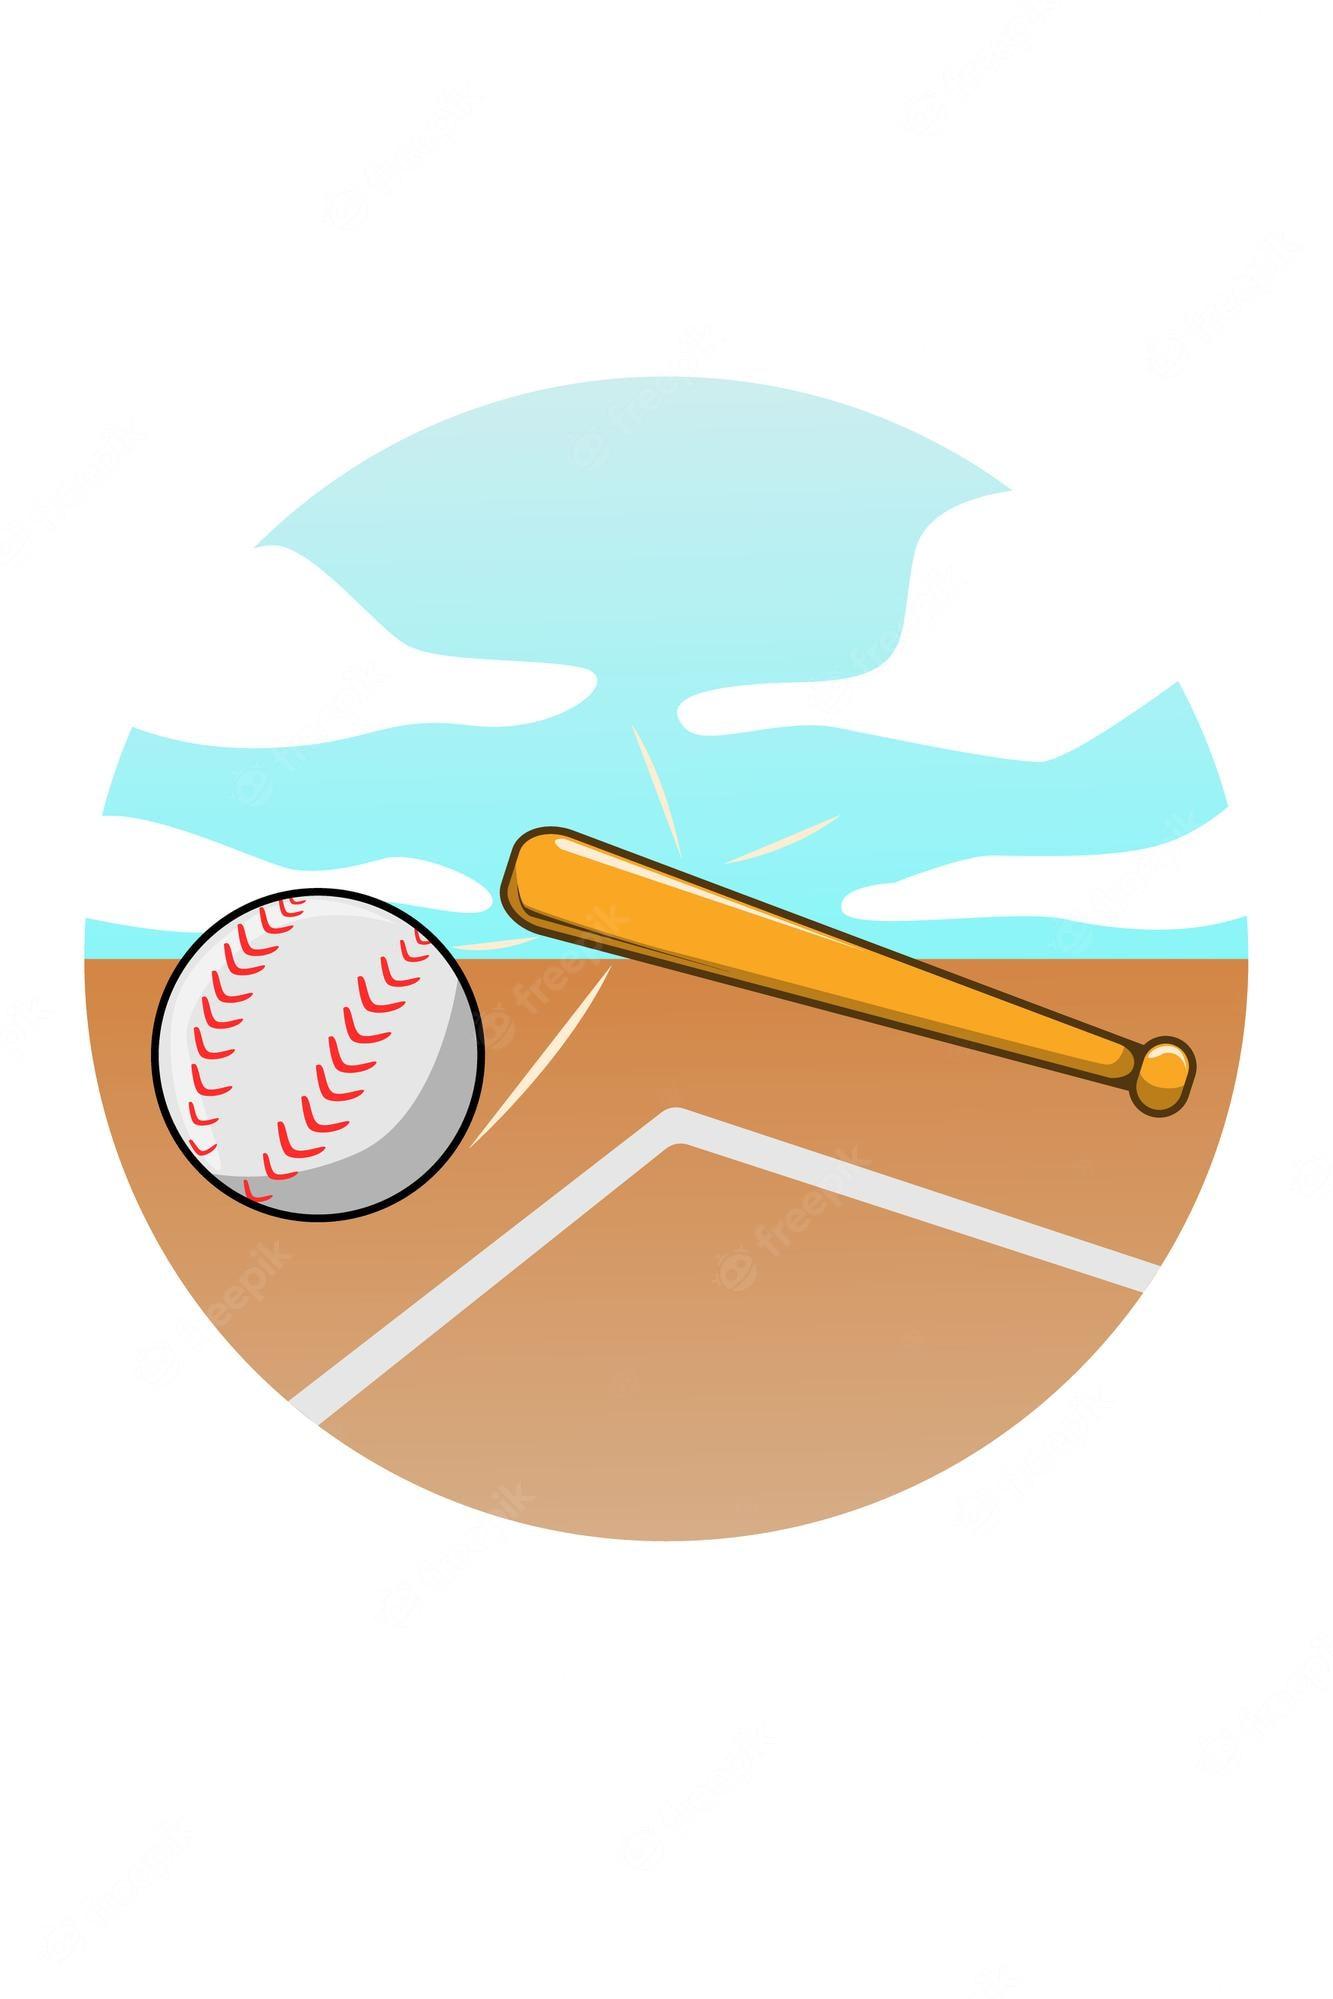 Premium Vector Baseball cartoon illustration